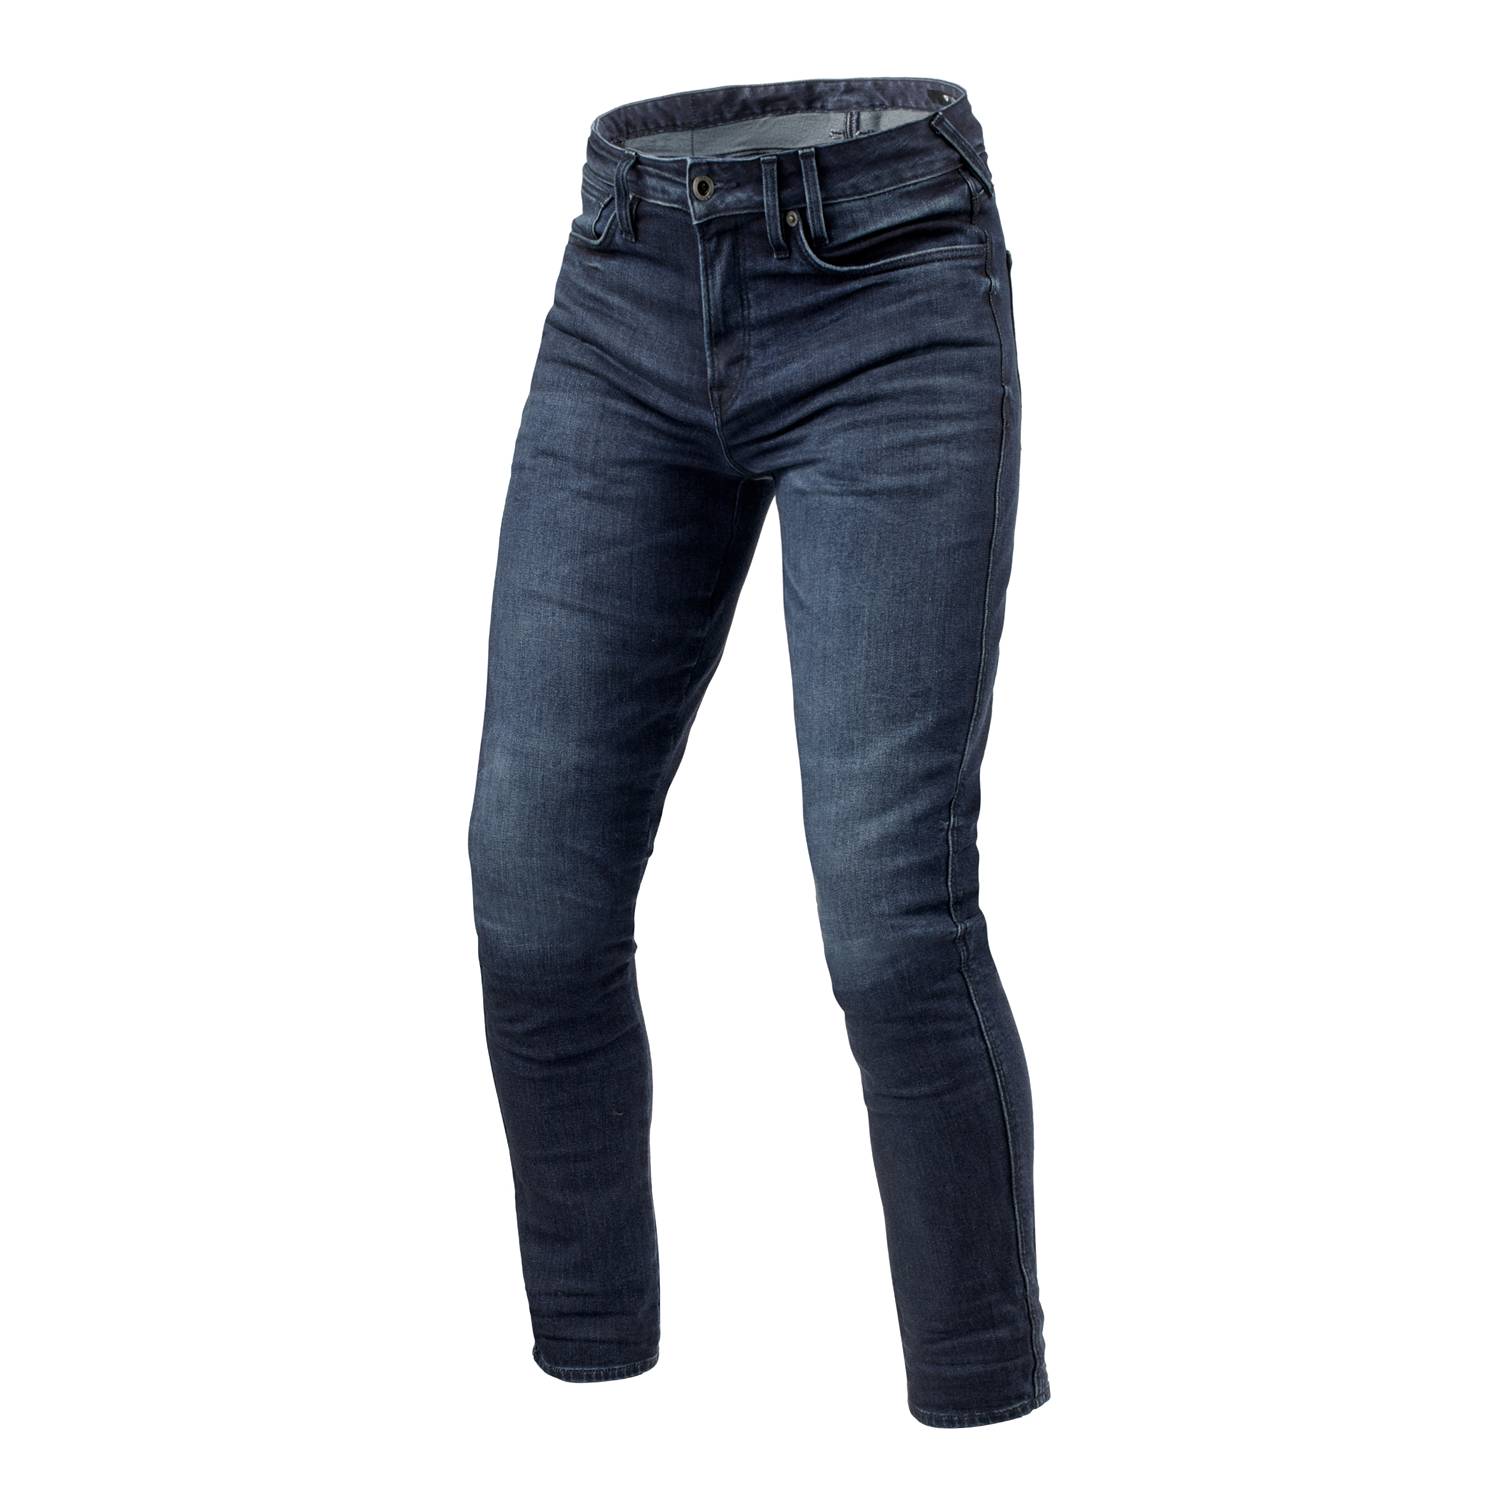 Image of REV'IT! Jeans Carlin SK Dark Blue Used L34 Motorcycle Jeans Talla L34/W32